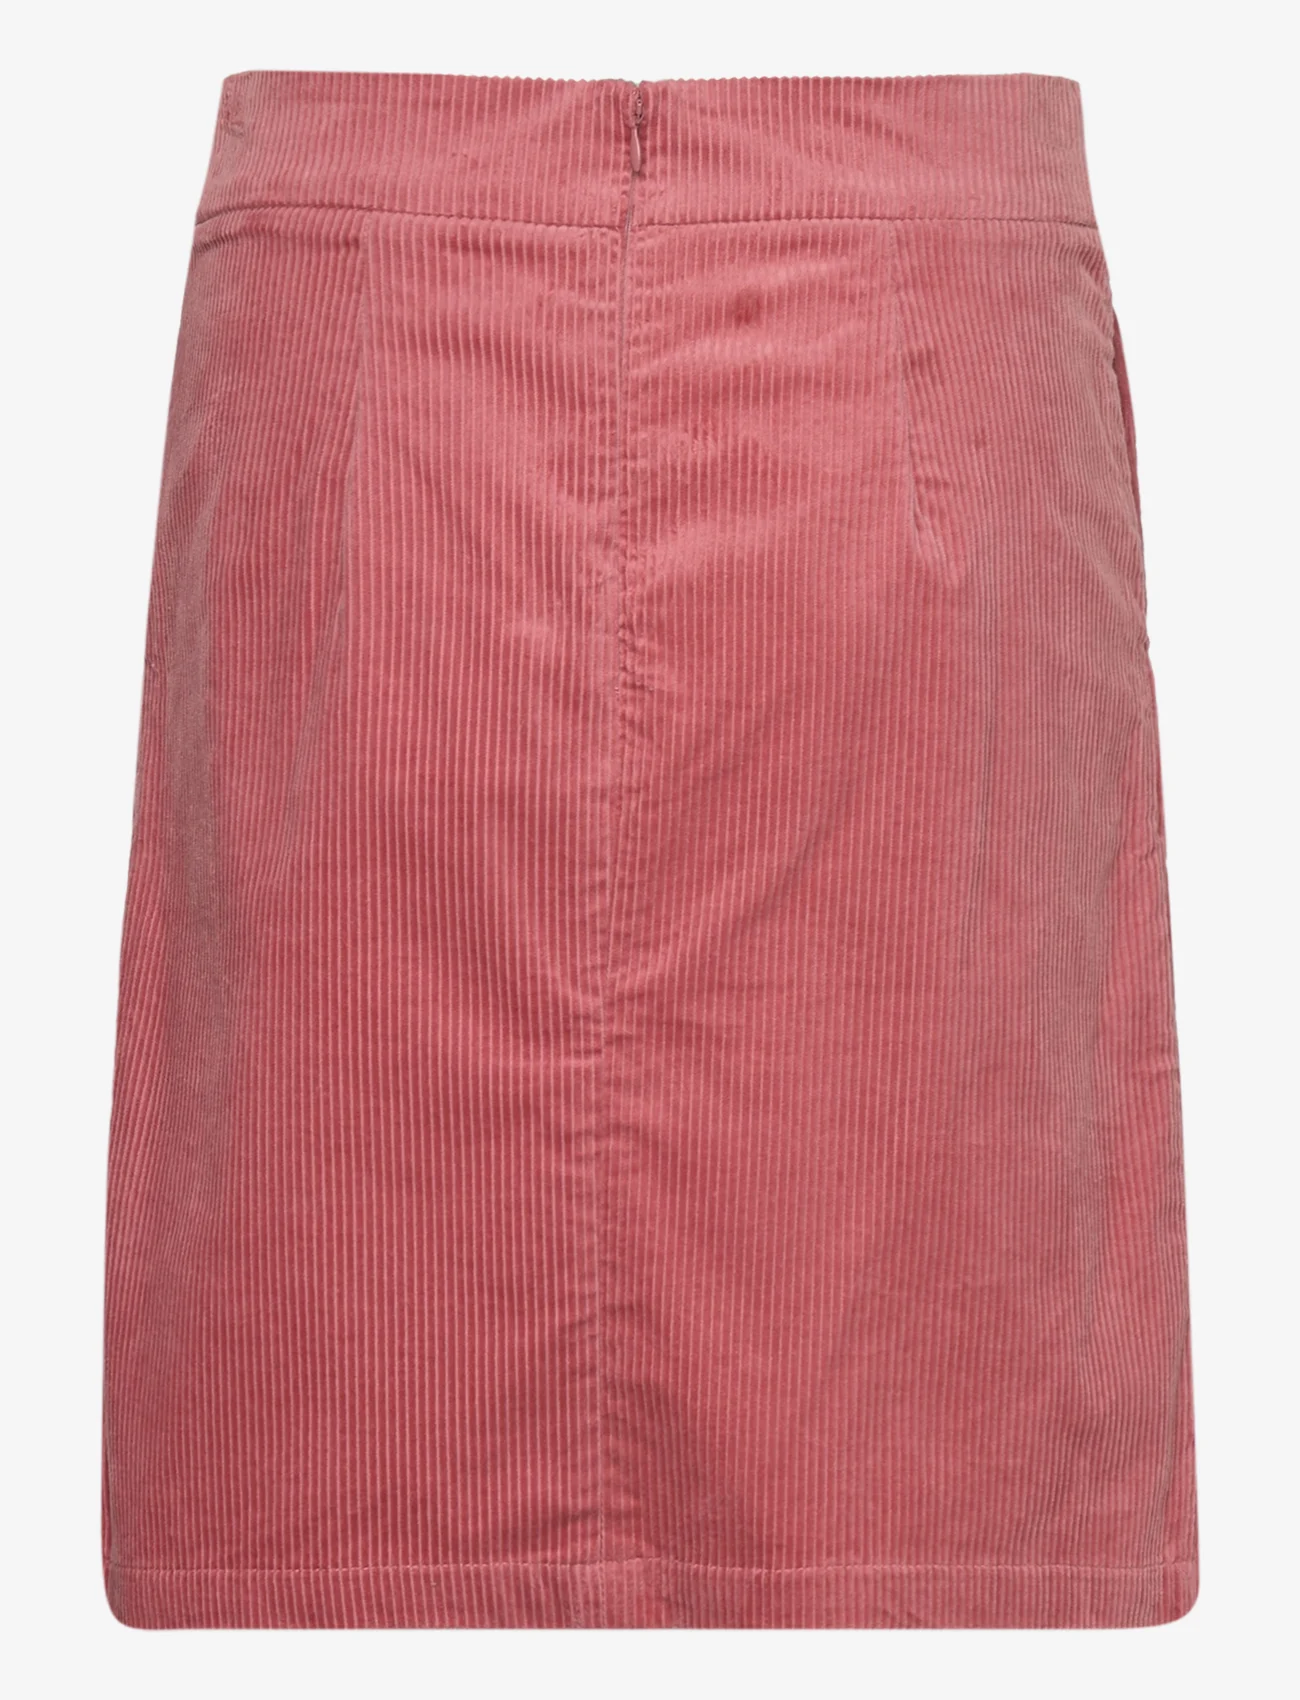 Noa Noa - TrineNN Skirt - short skirts - light mahogany - 1